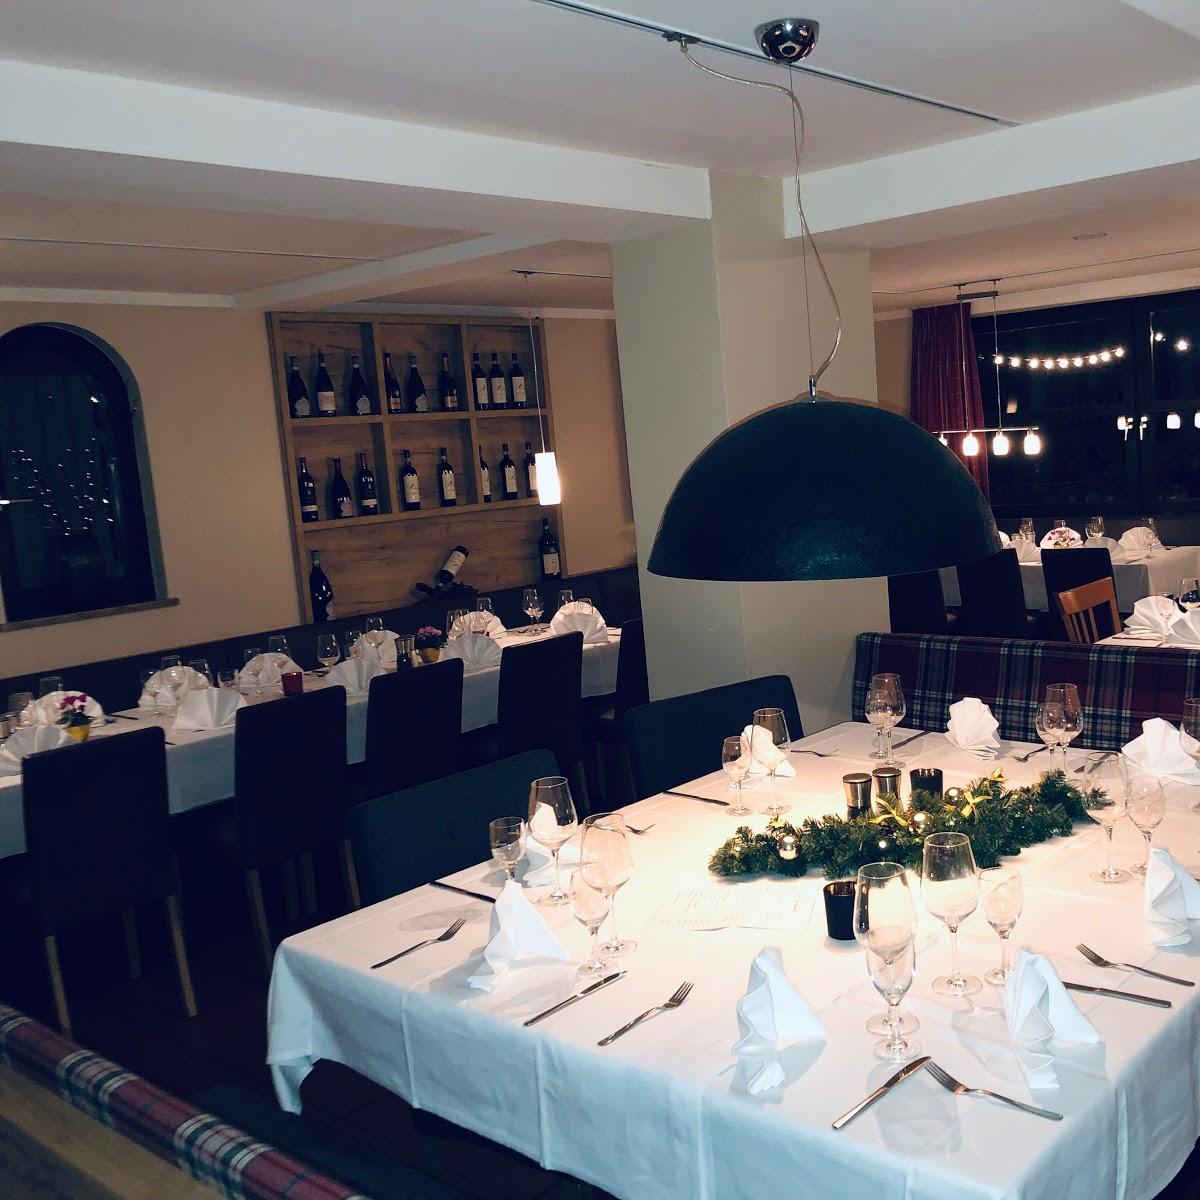 Restaurant "Trattoria D‘Azzuro bei Dani" in Bamberg